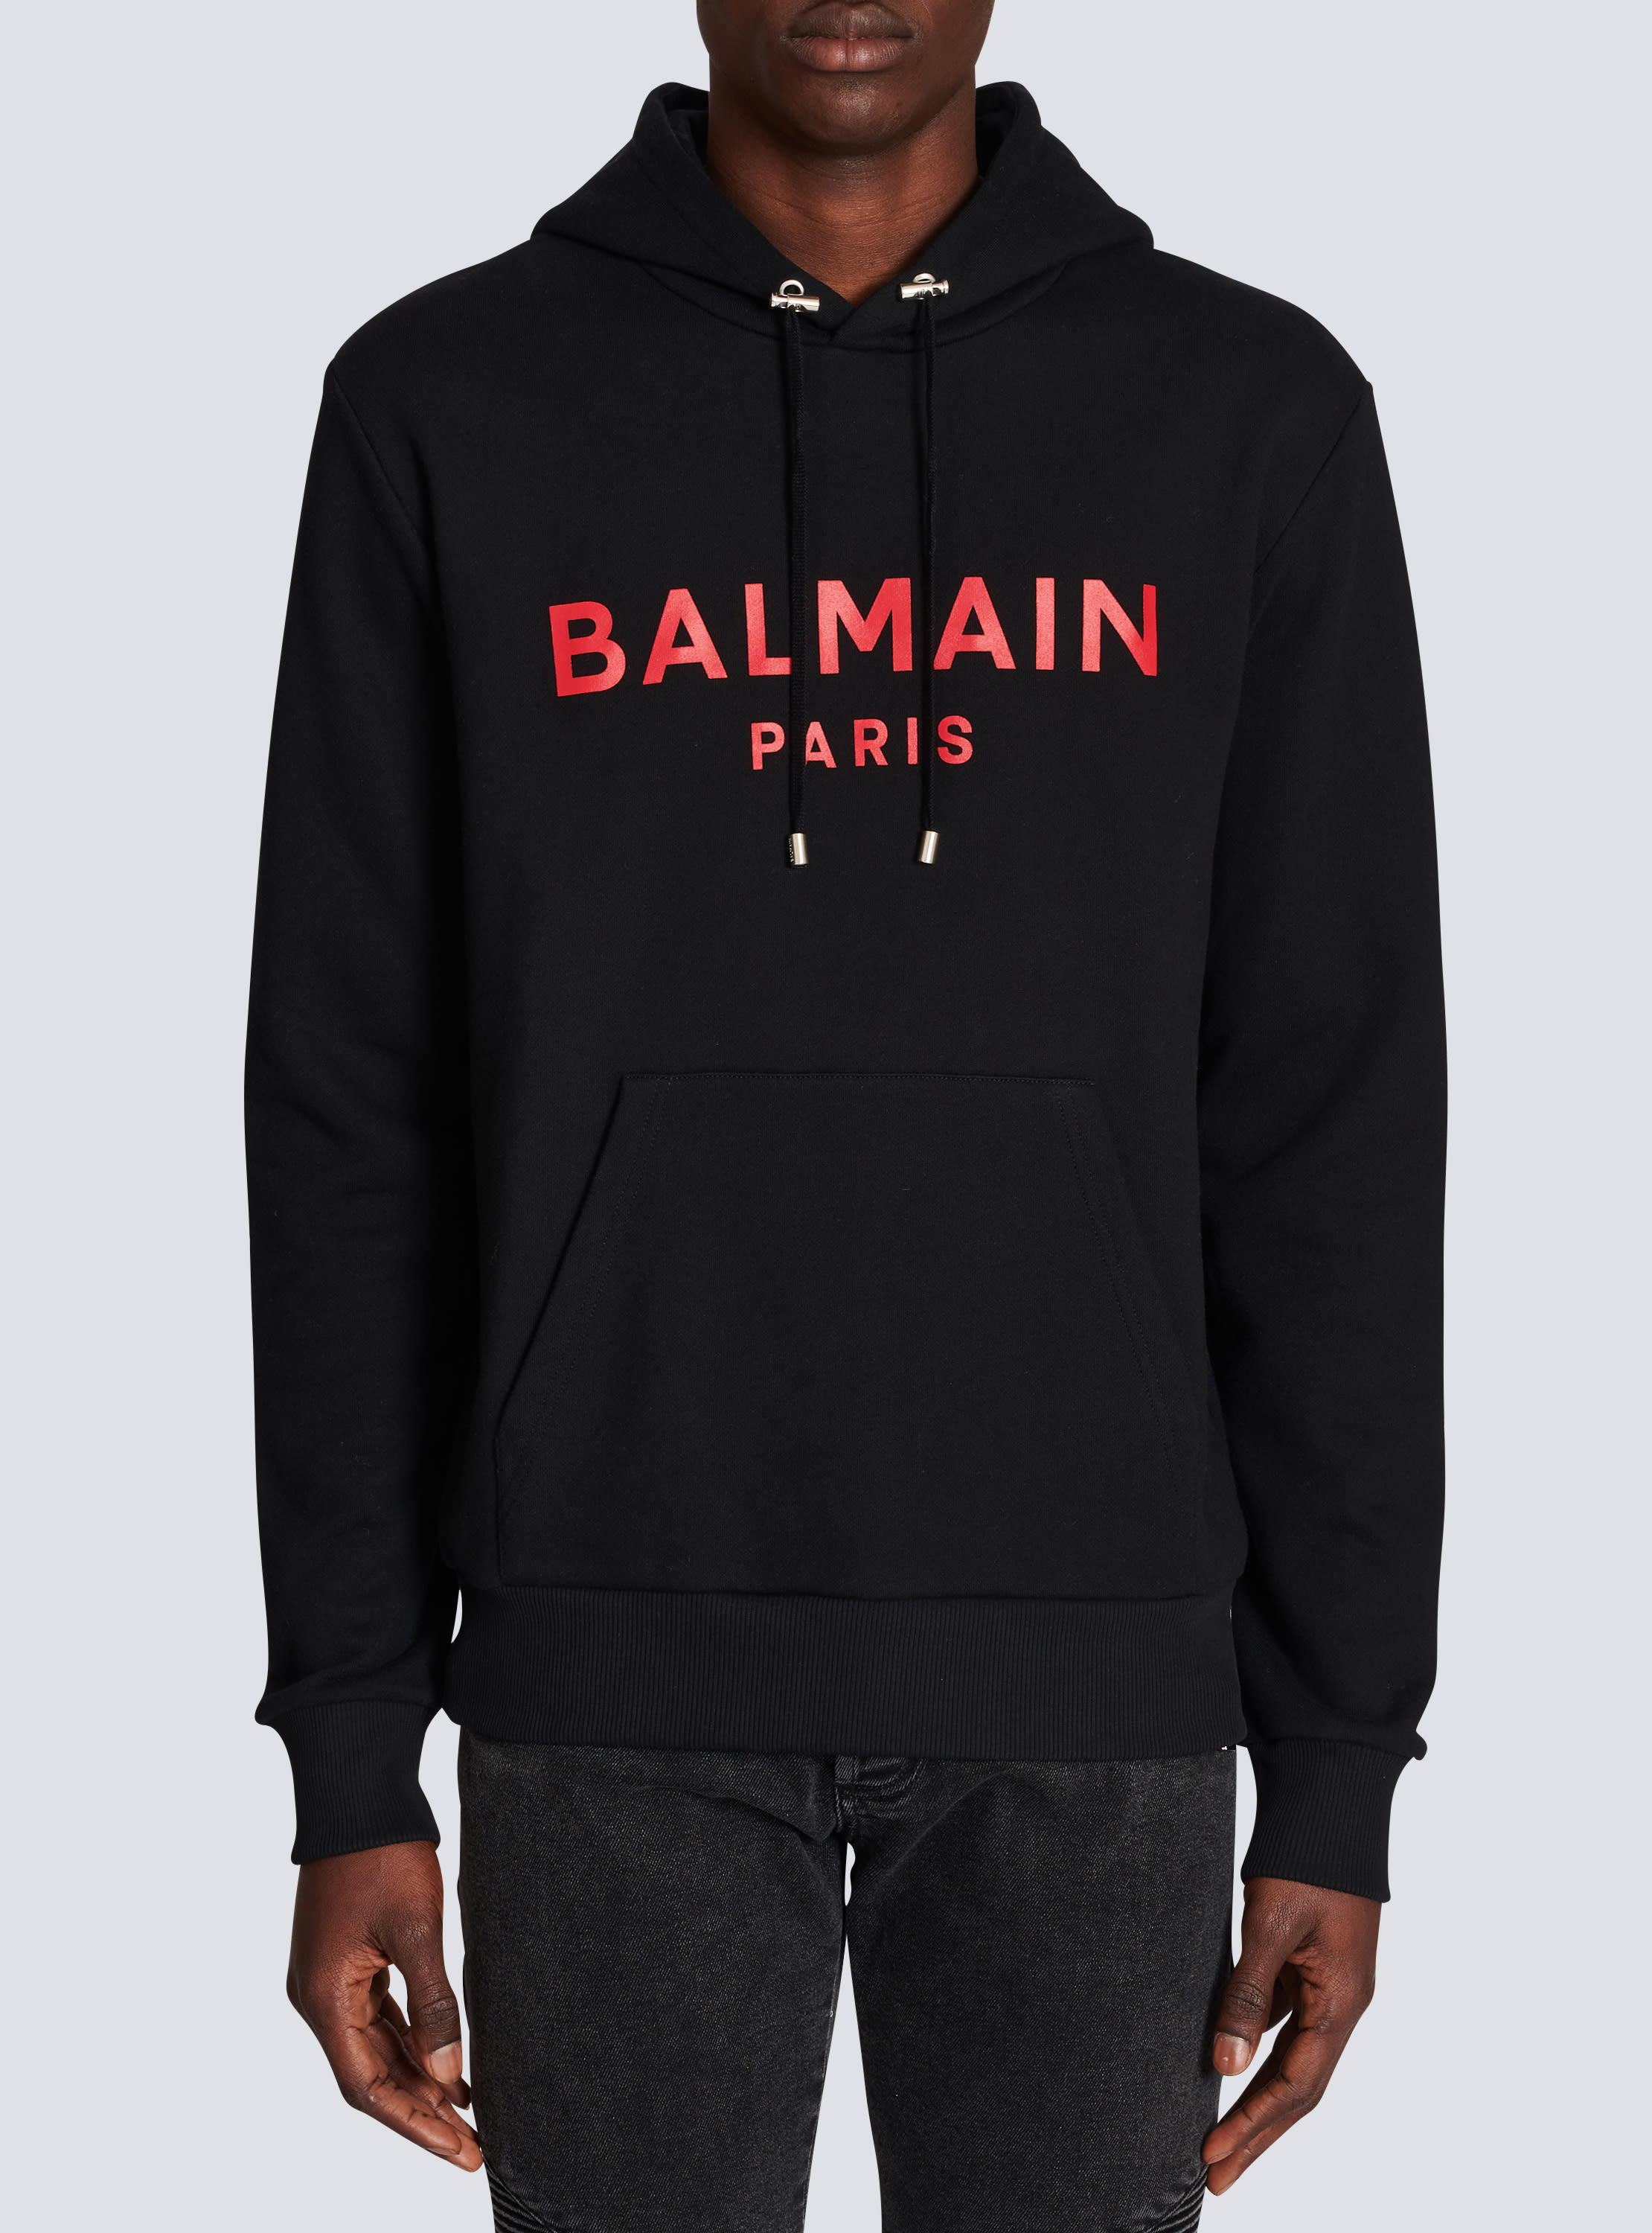 Lavet til at huske Universitet Eftermæle Cotton sweatshirt with Balmain Paris logo print black - Men | BALMAIN